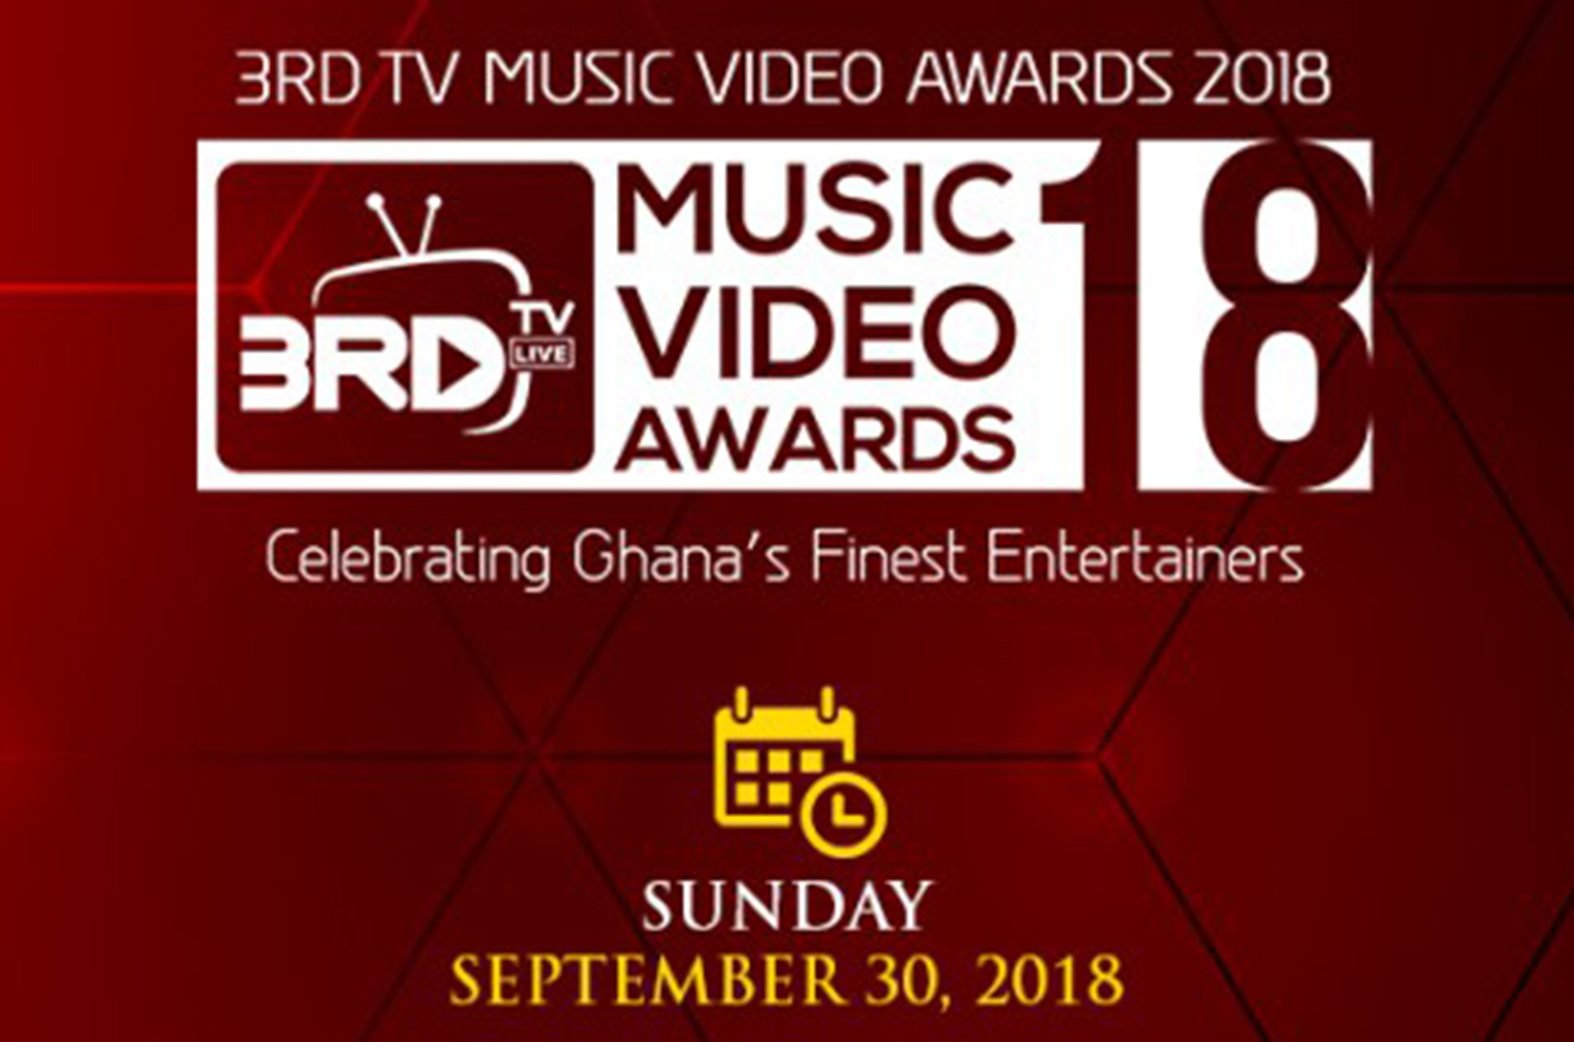 Full List Of Winners At 2018 3RD TV Music Video Awards